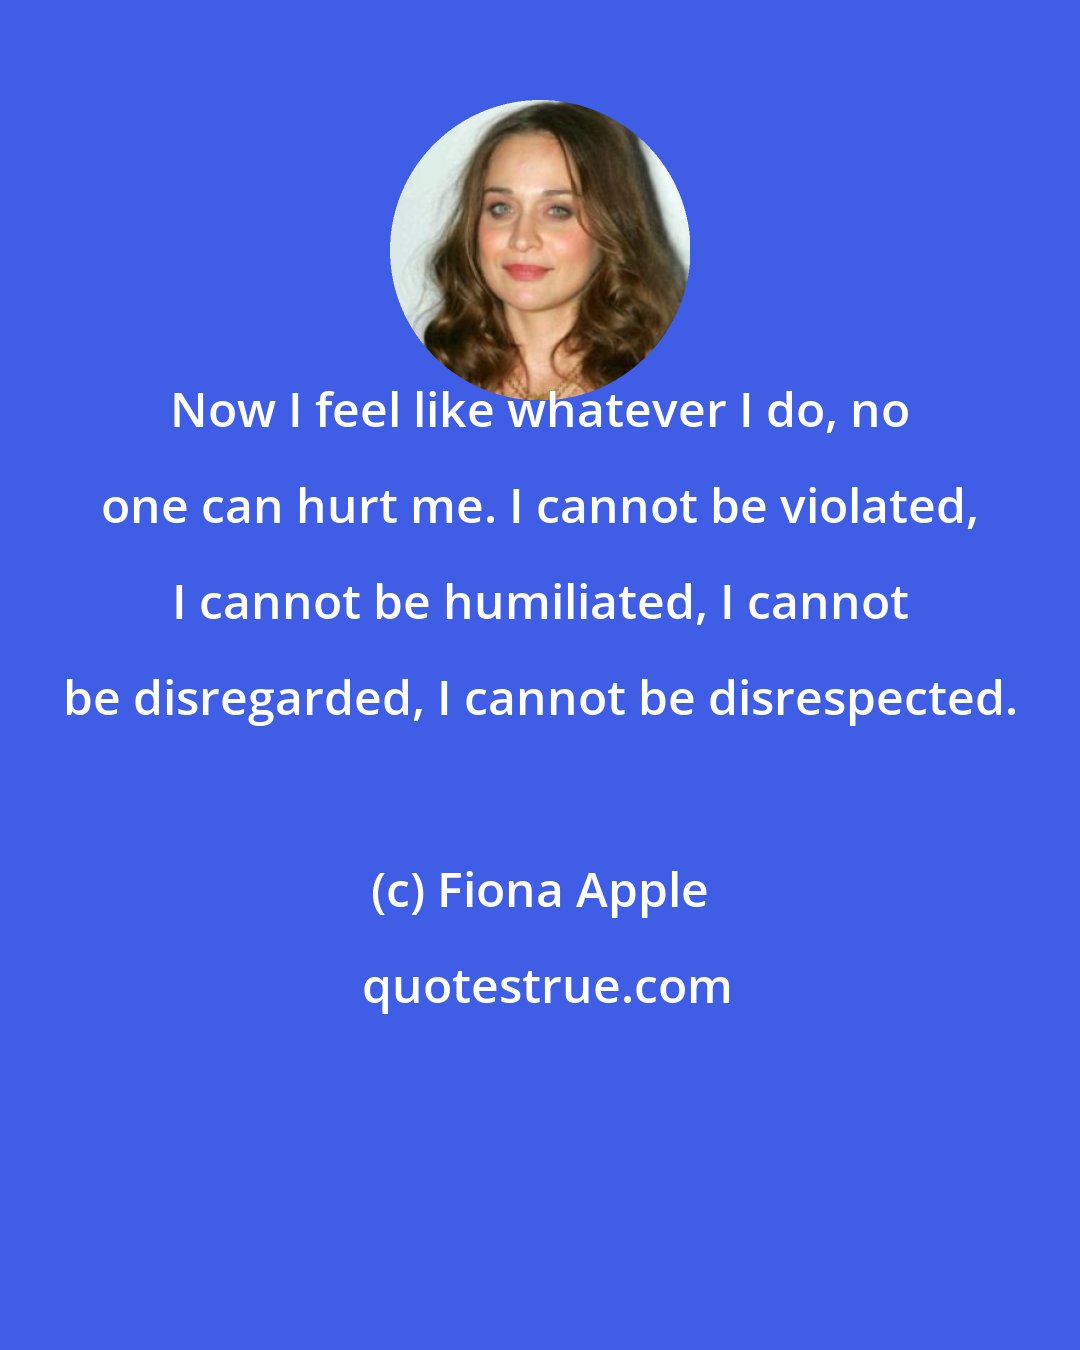 Fiona Apple: Now I feel like whatever I do, no one can hurt me. I cannot be violated, I cannot be humiliated, I cannot be disregarded, I cannot be disrespected.